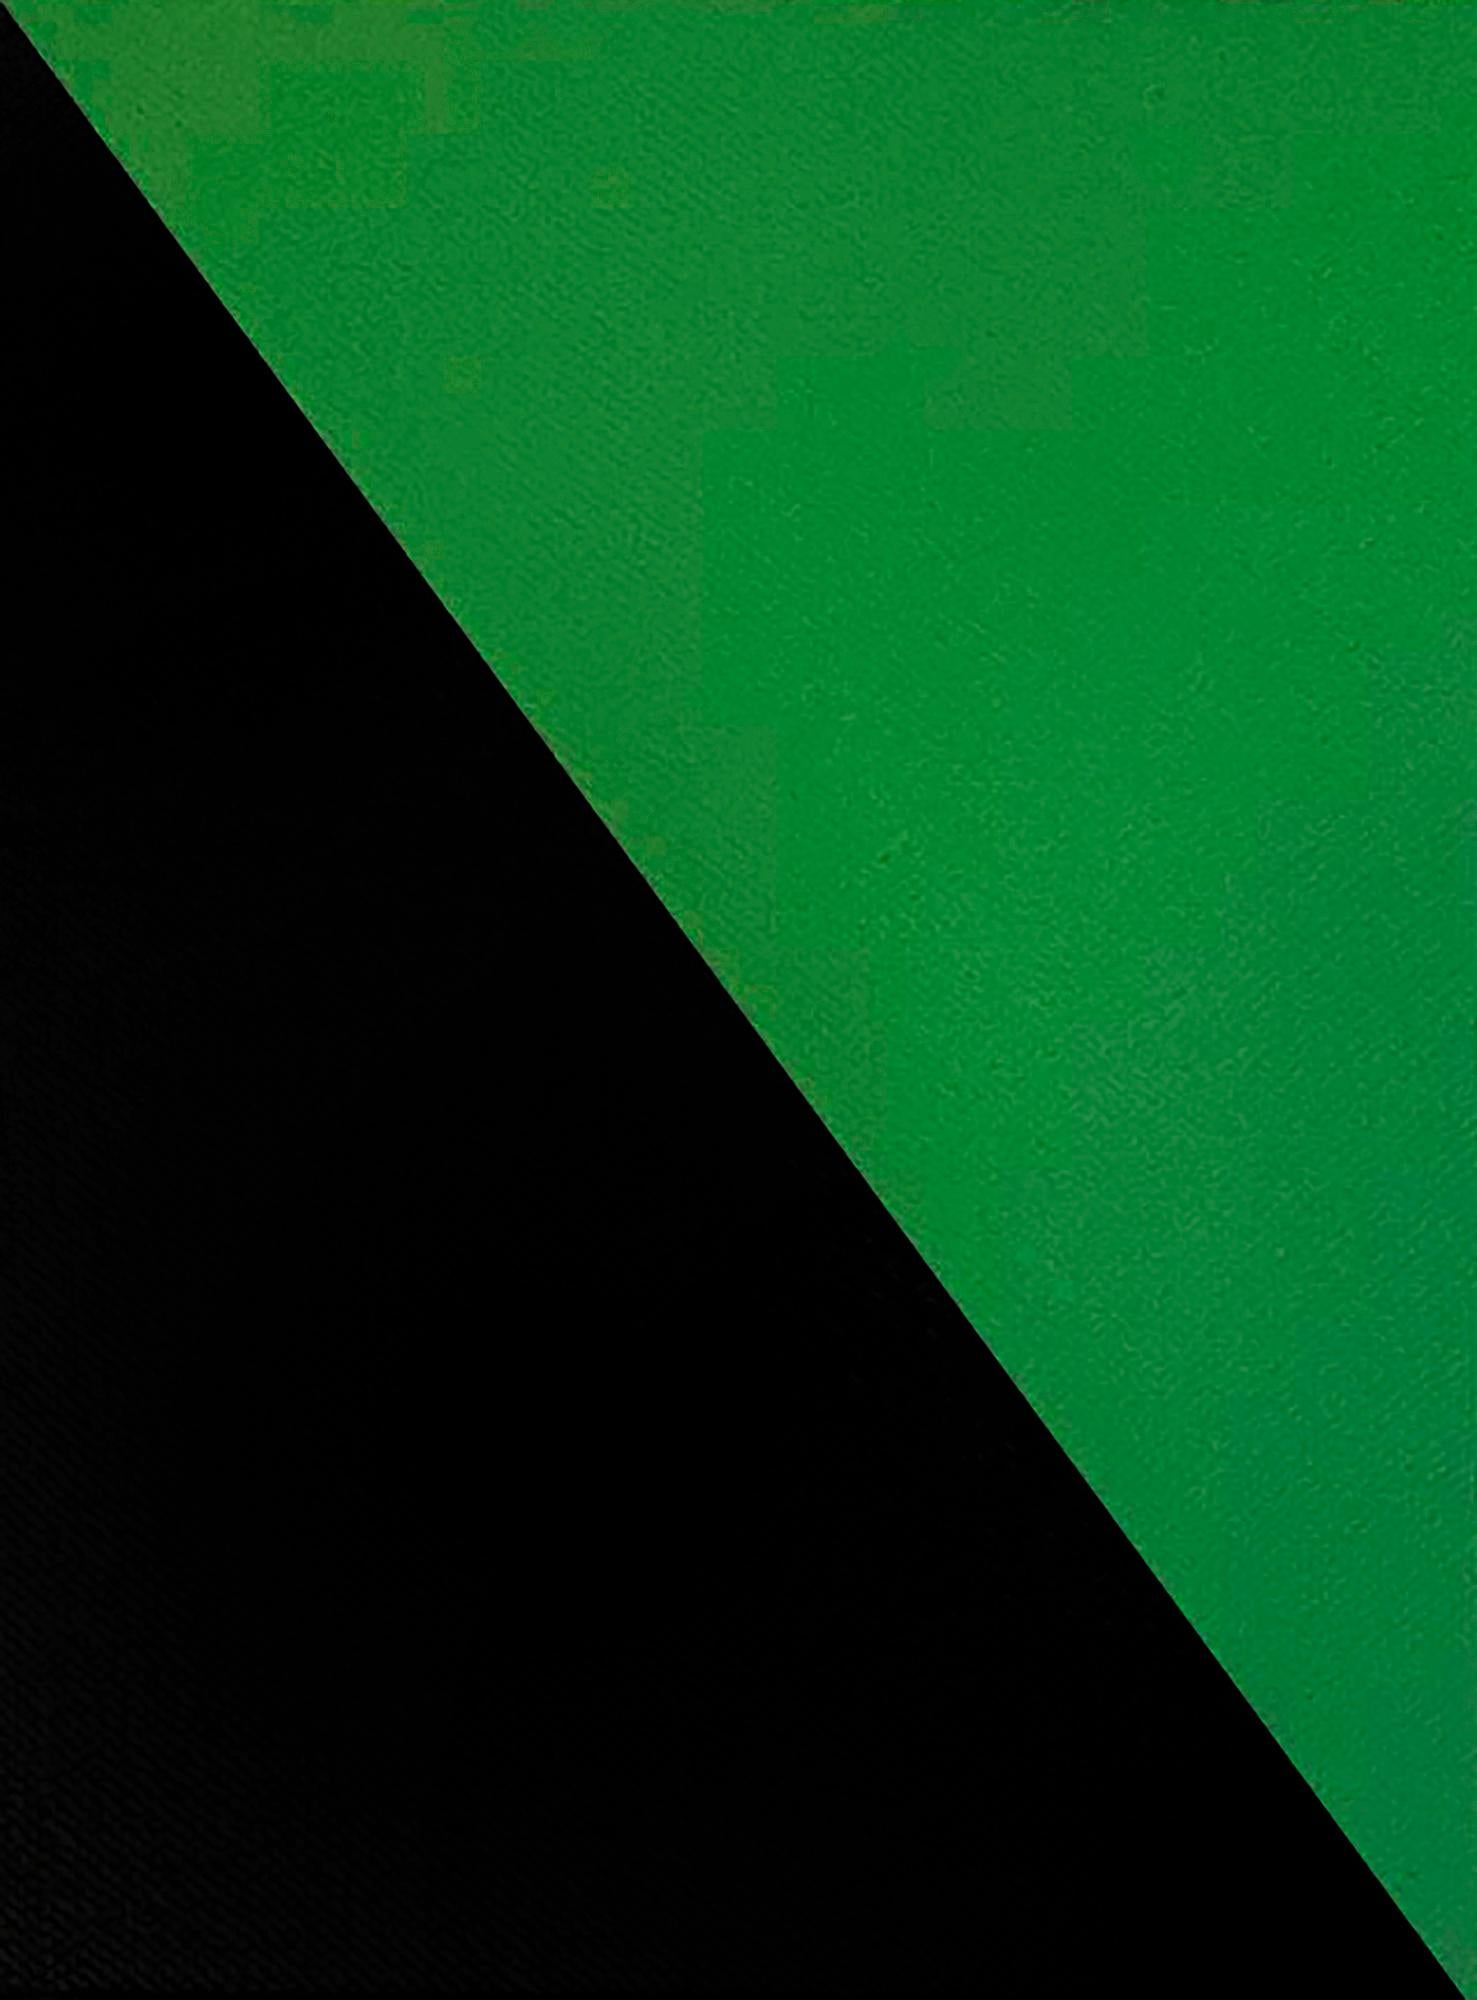 Sara Walton - Peinture abstraite minimaliste "Split Rail" verte et noire 